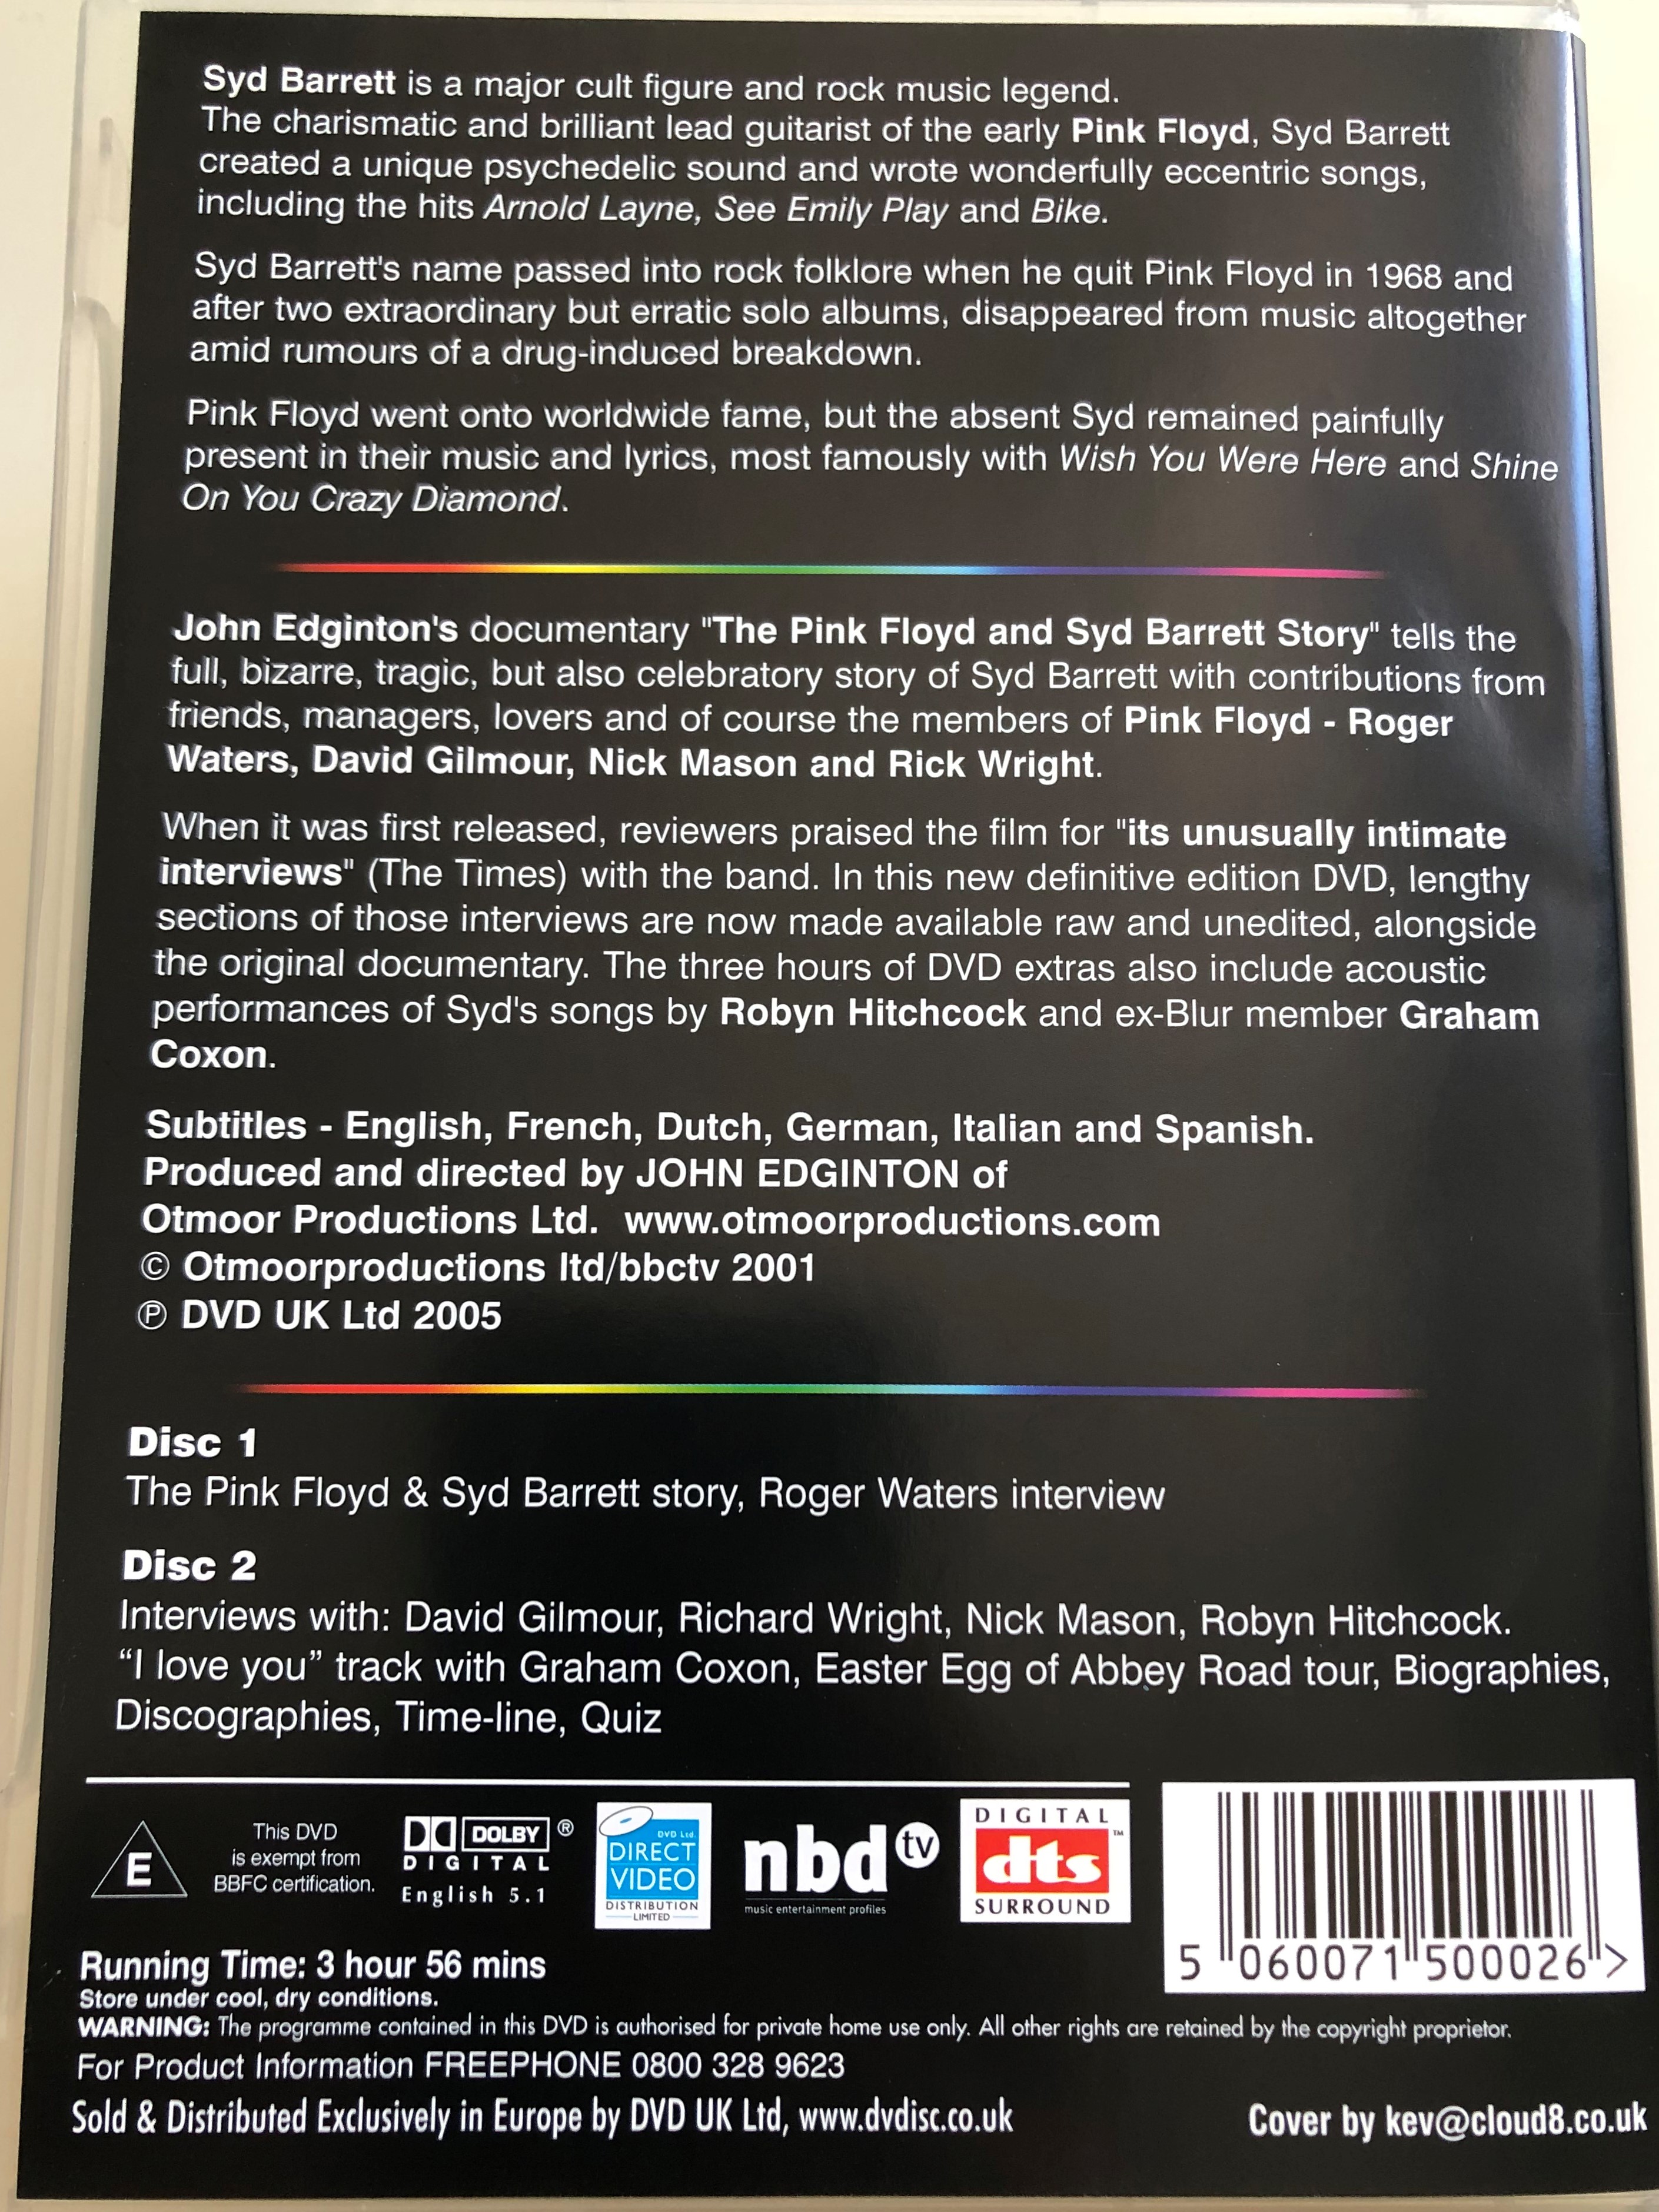 the-pink-floyd-syd-barrett-story-2-dvd-set-2005-the-definitive-edition-4.jpg